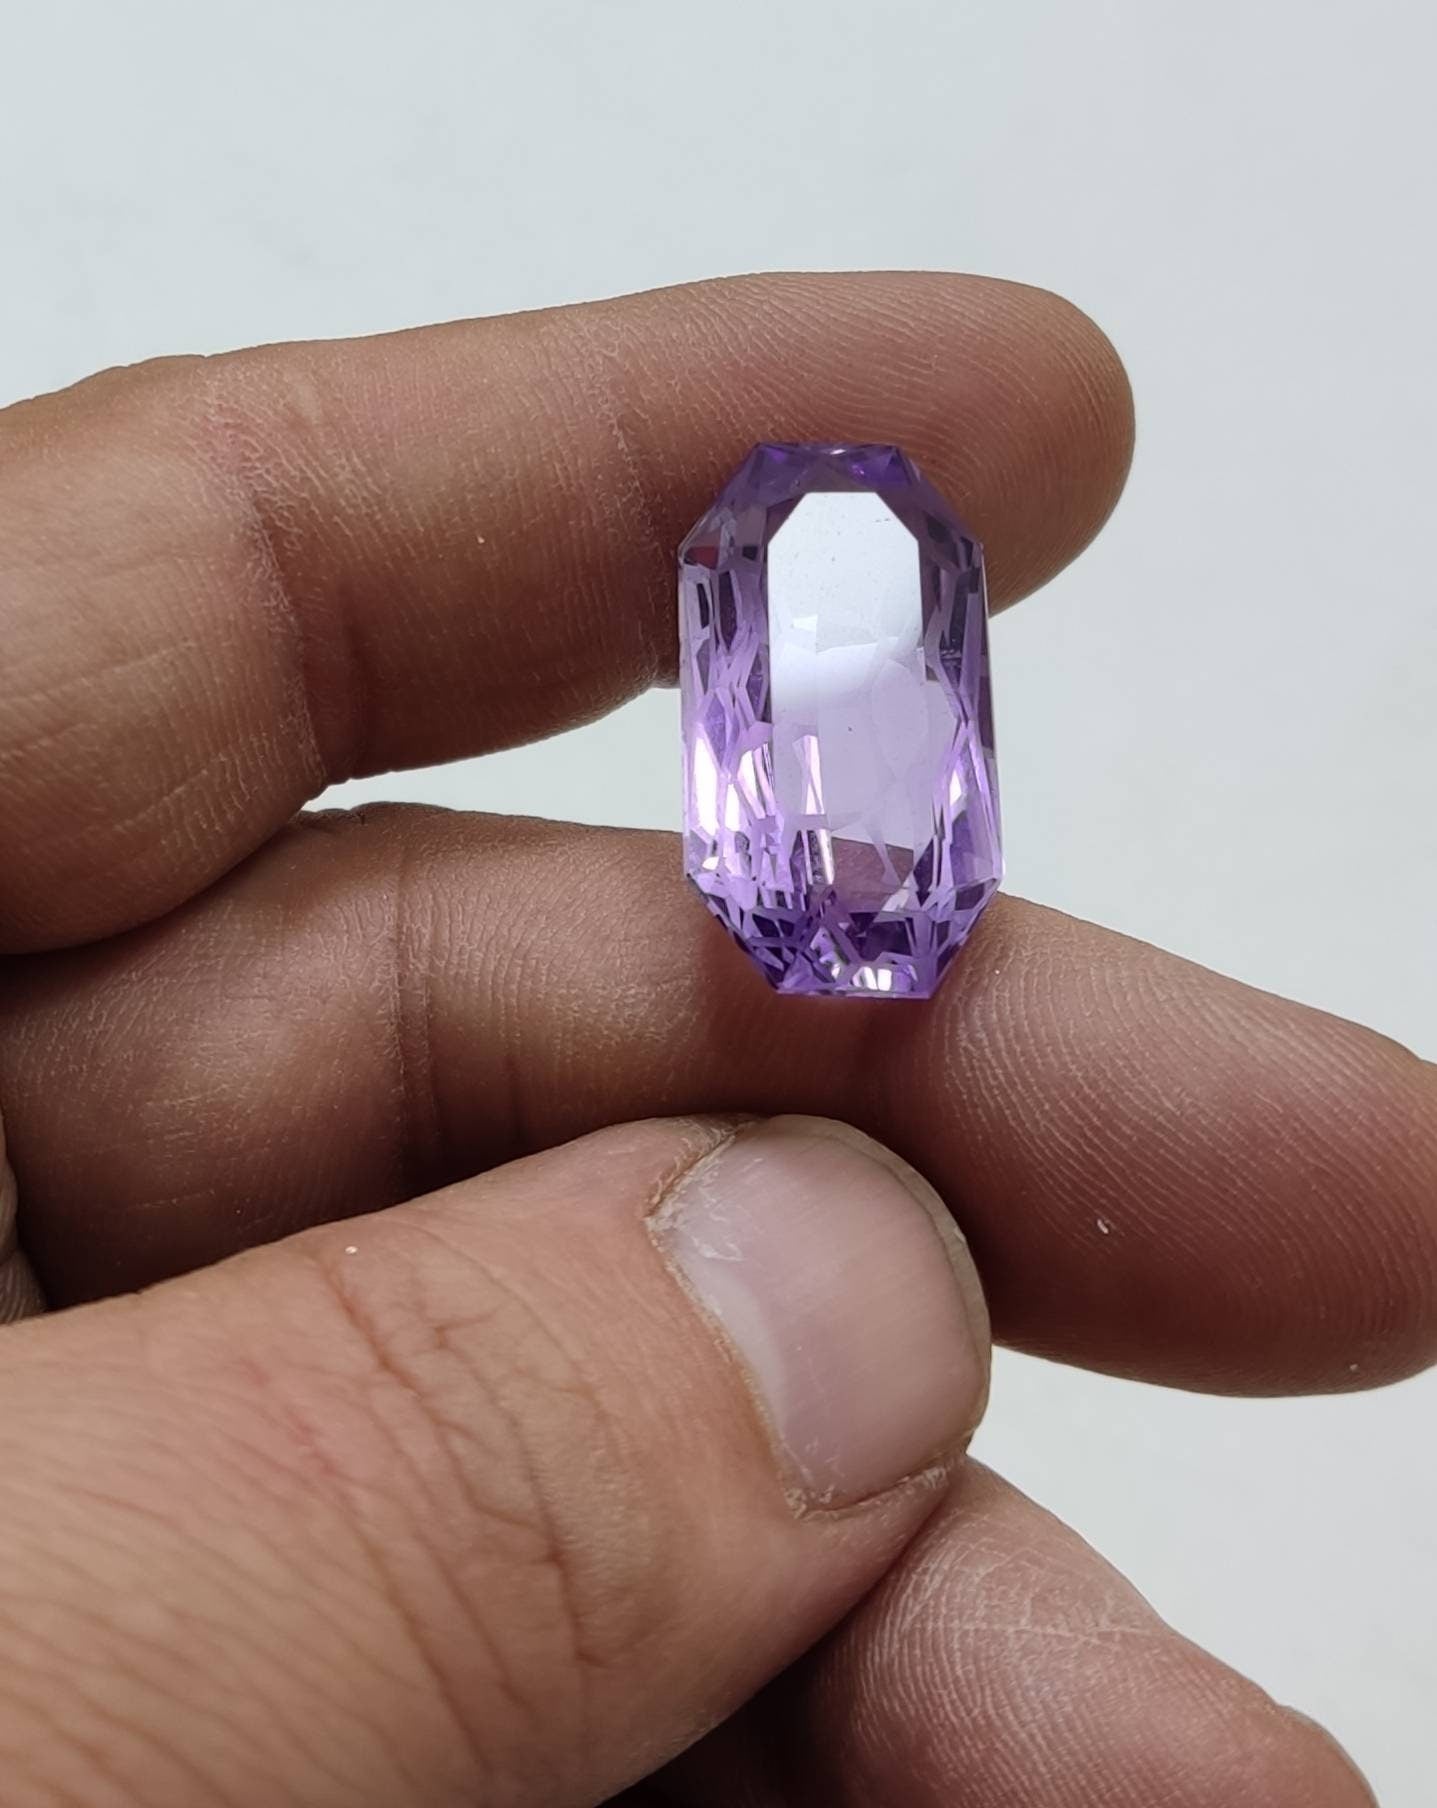 An amazing faceted custom elongated octagon cut amethyst gemstone 23 carats